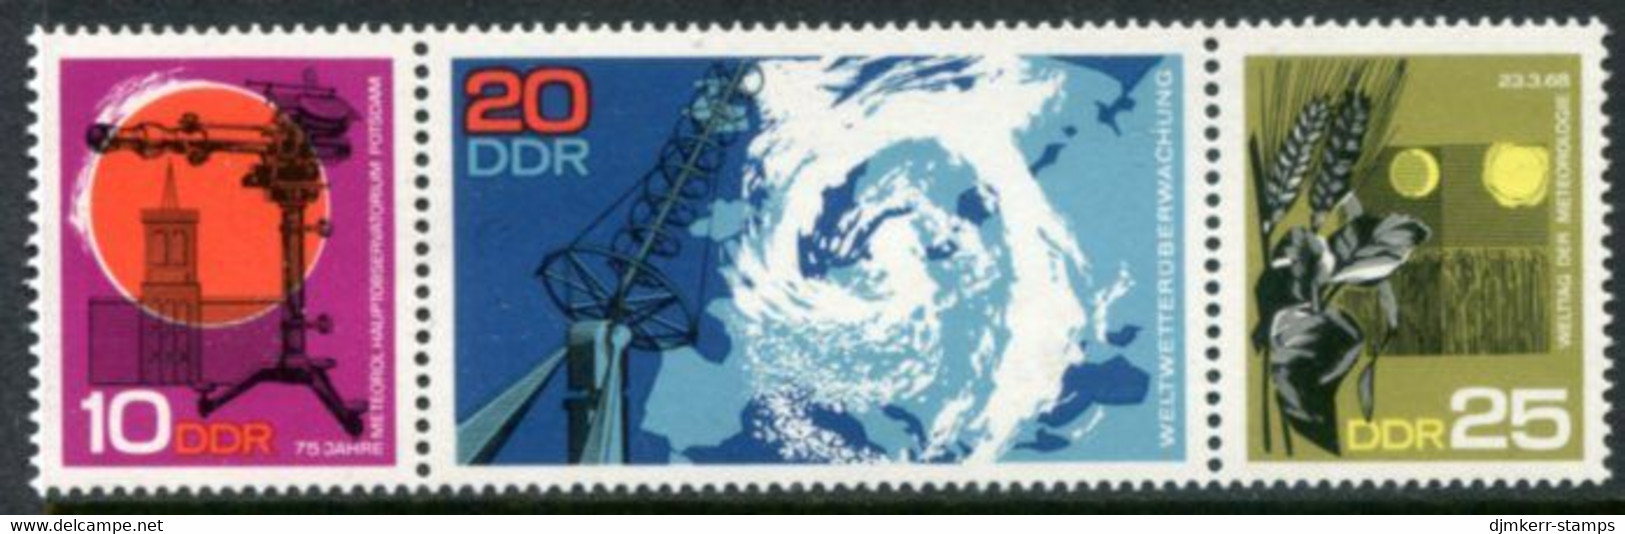 DDR / E. GERMANY 1968 Meteorological Observatory Strip MNH / **.  Michel 1343-45 - Unused Stamps